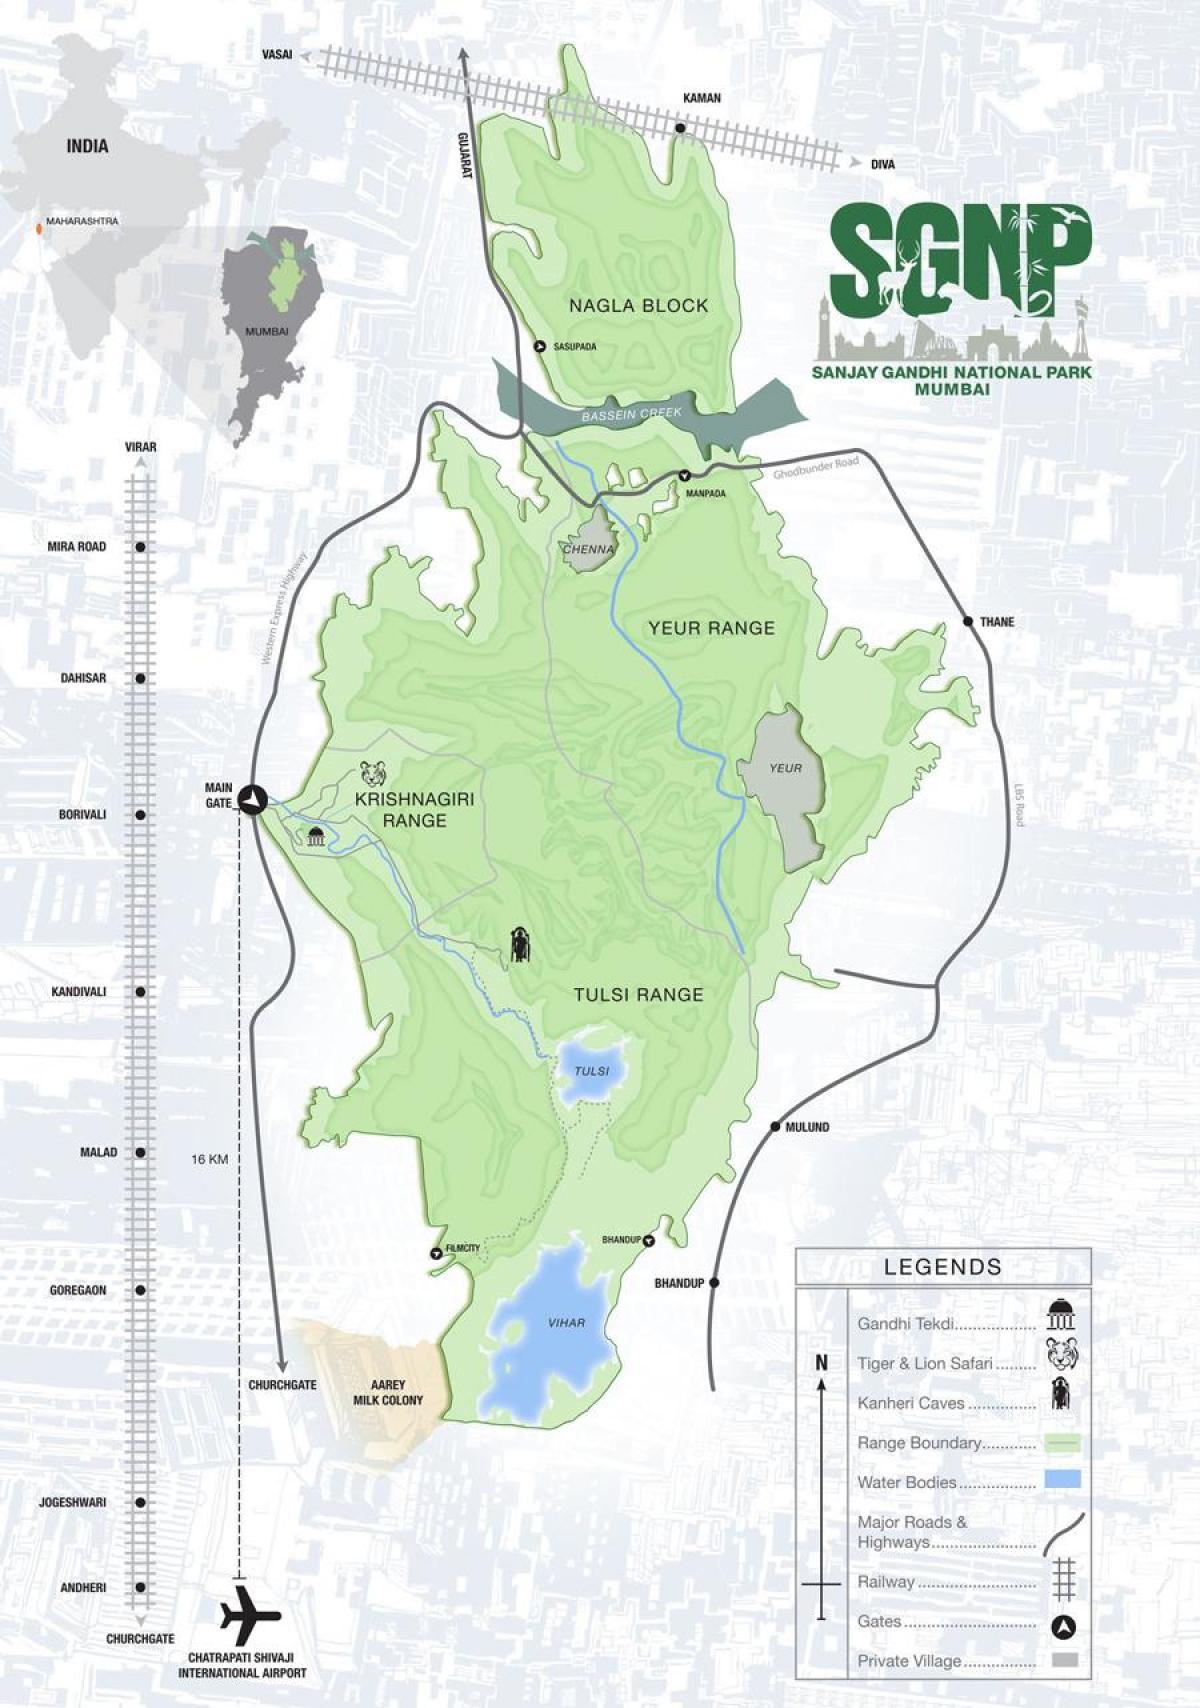 Borivali parc nacional mapa